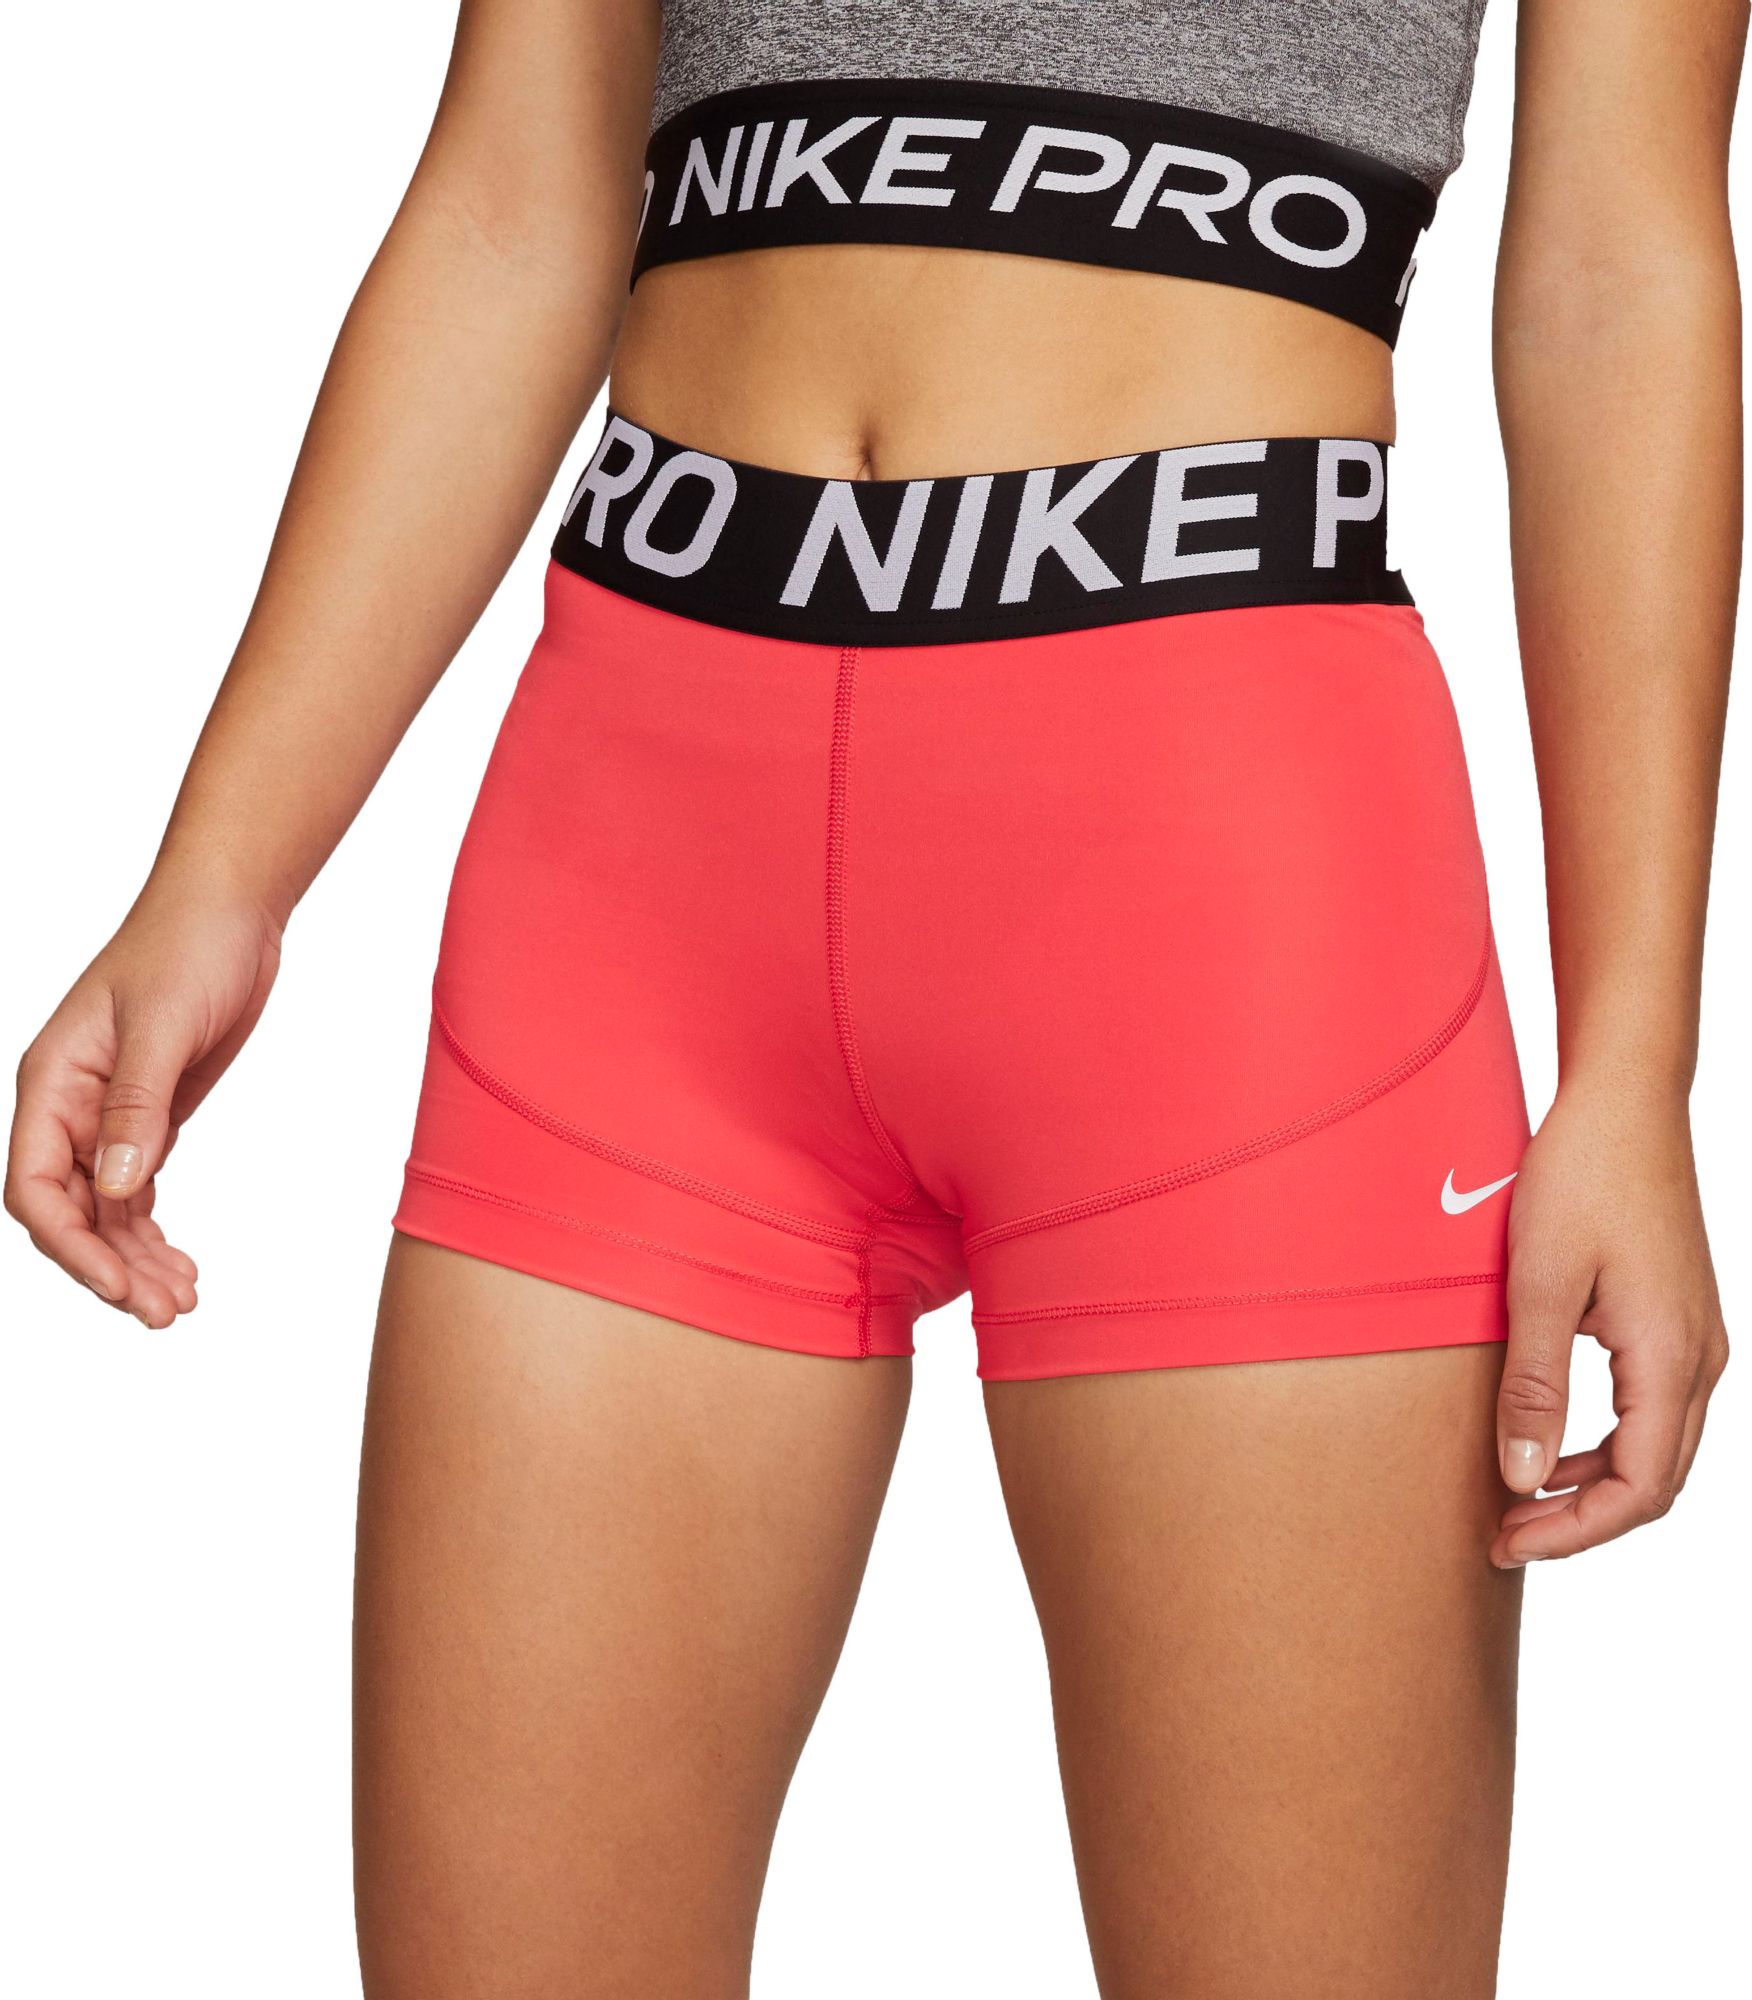 red nike pros shorts